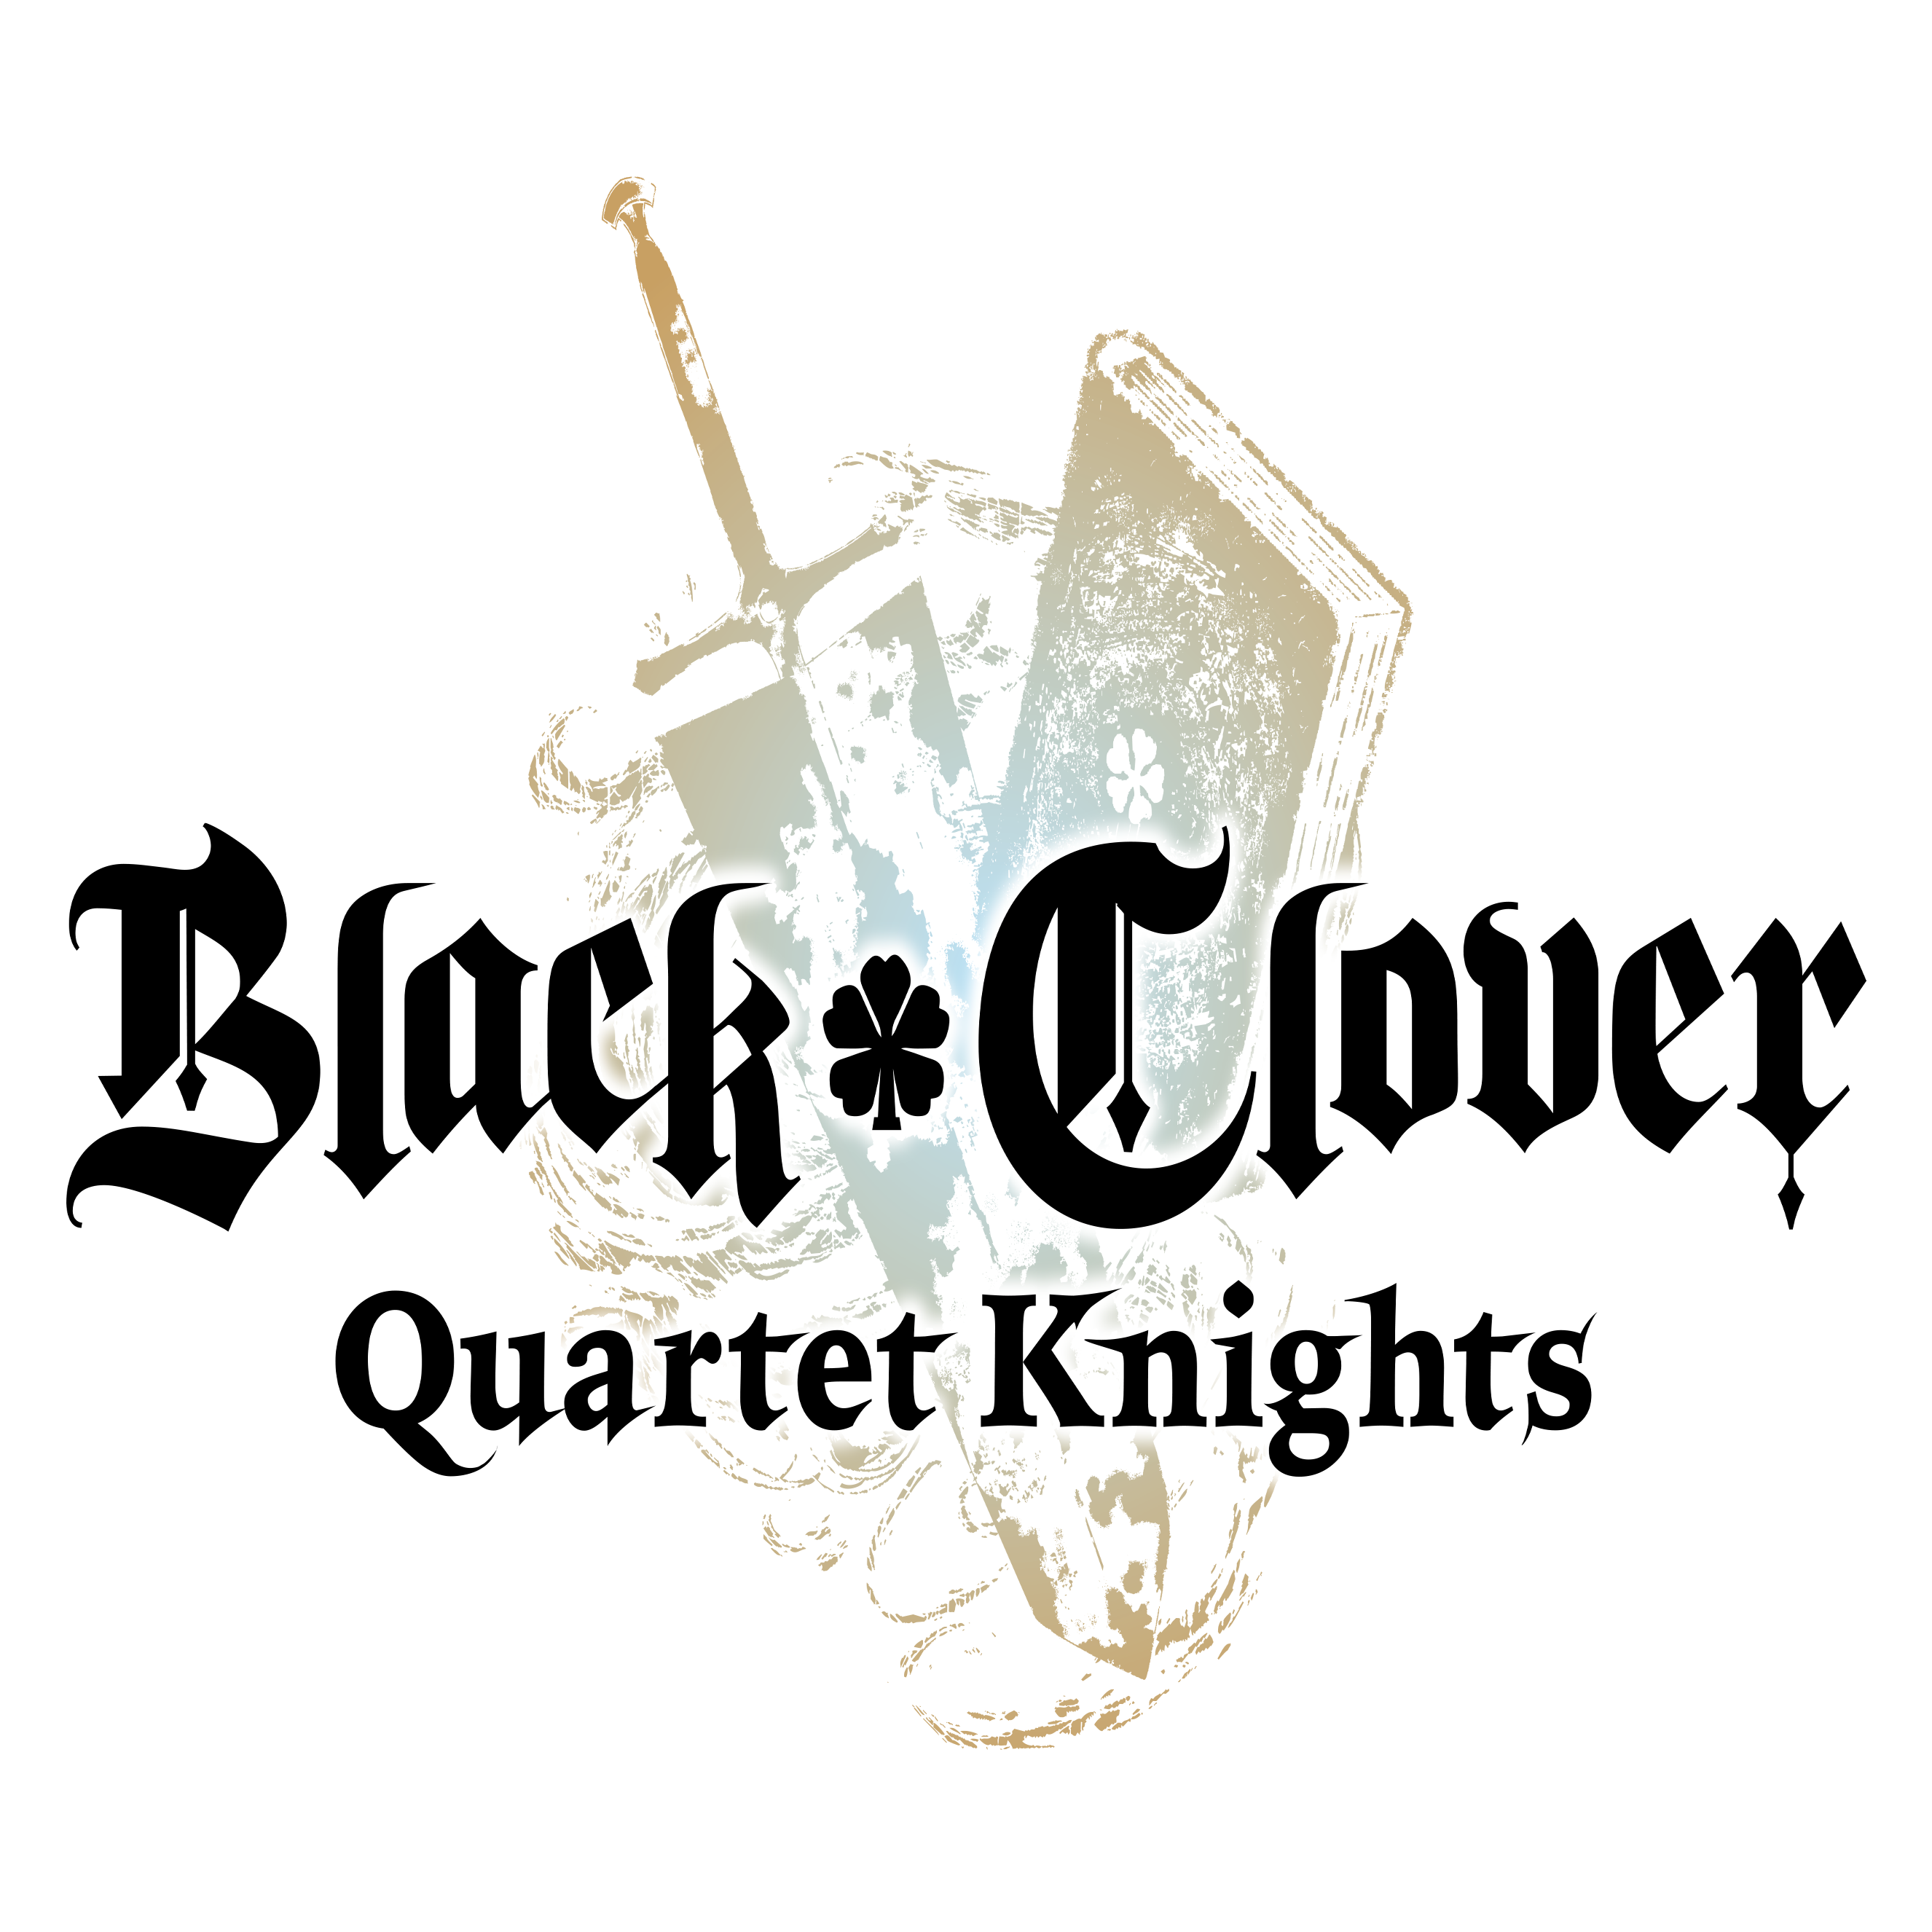 Demoversie Black Clover Quartet Knights nu beschikbaar